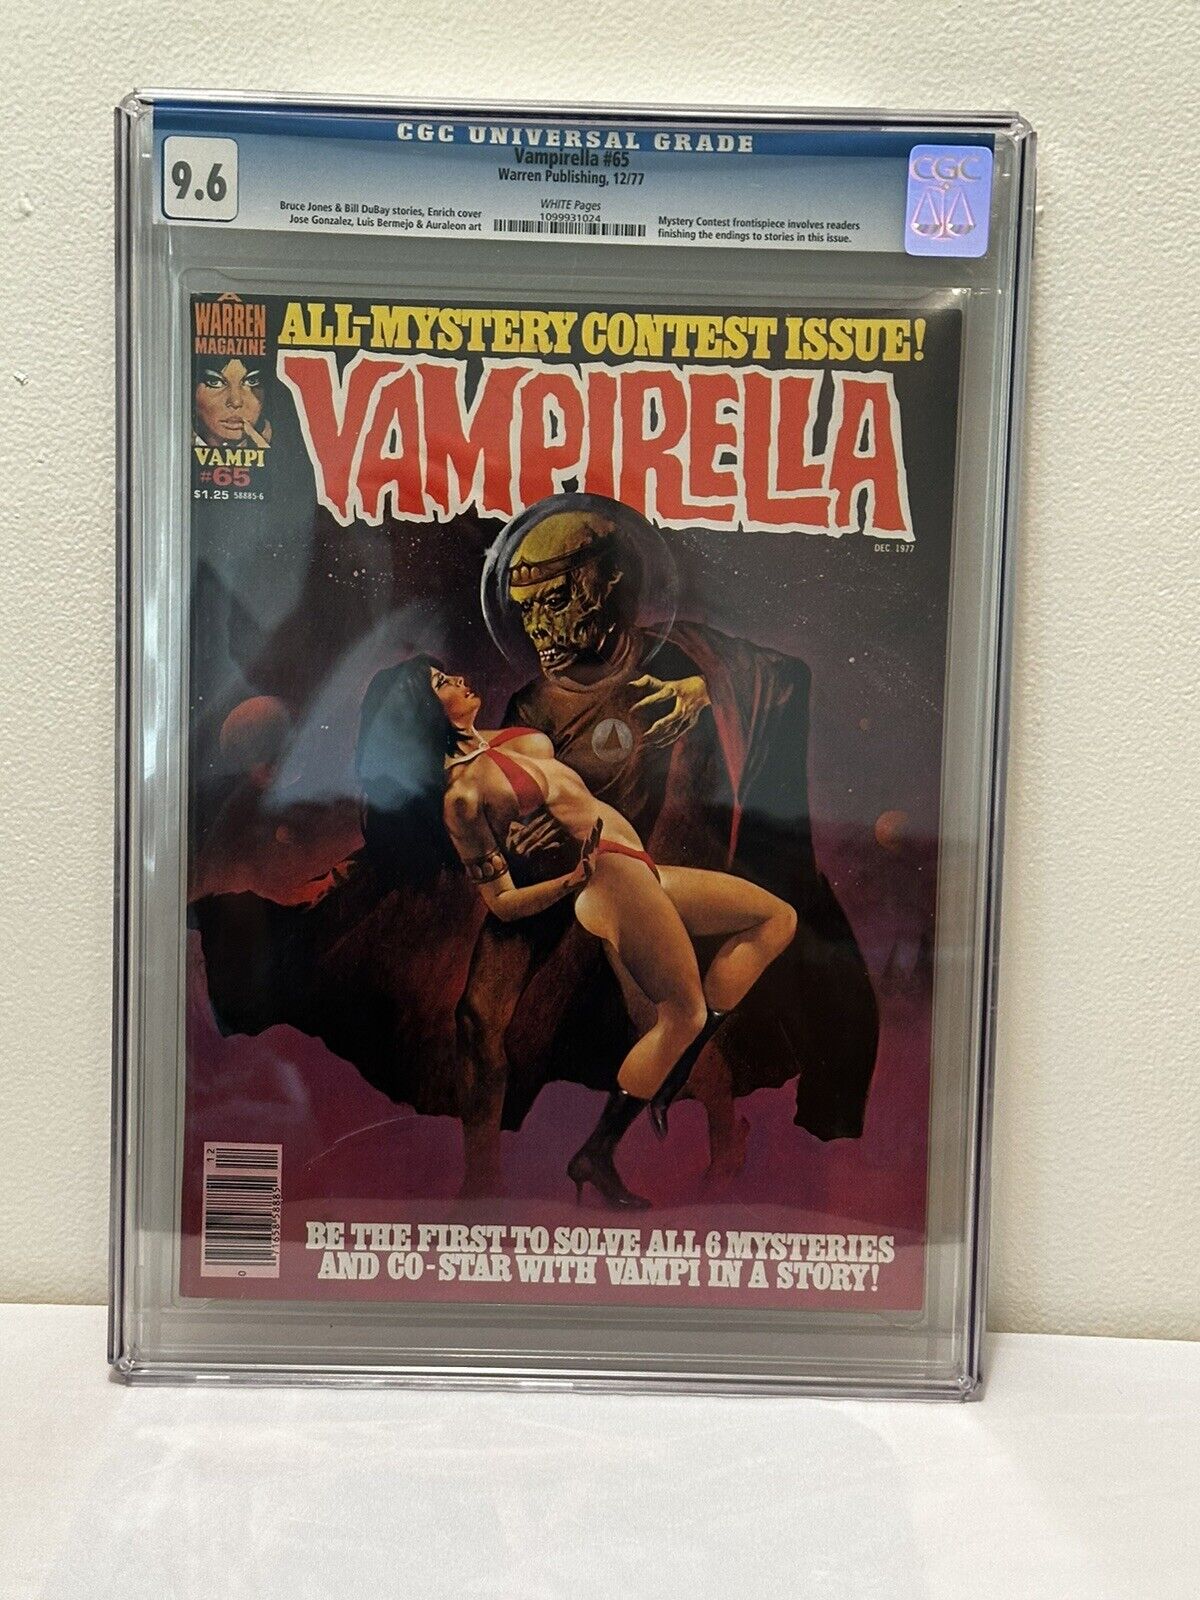 Vampirella 65🔥CGC 9.6🔥WHITE PAGES🔥 Classic Cover Art🔥Extra Bright Copy🔥Rare